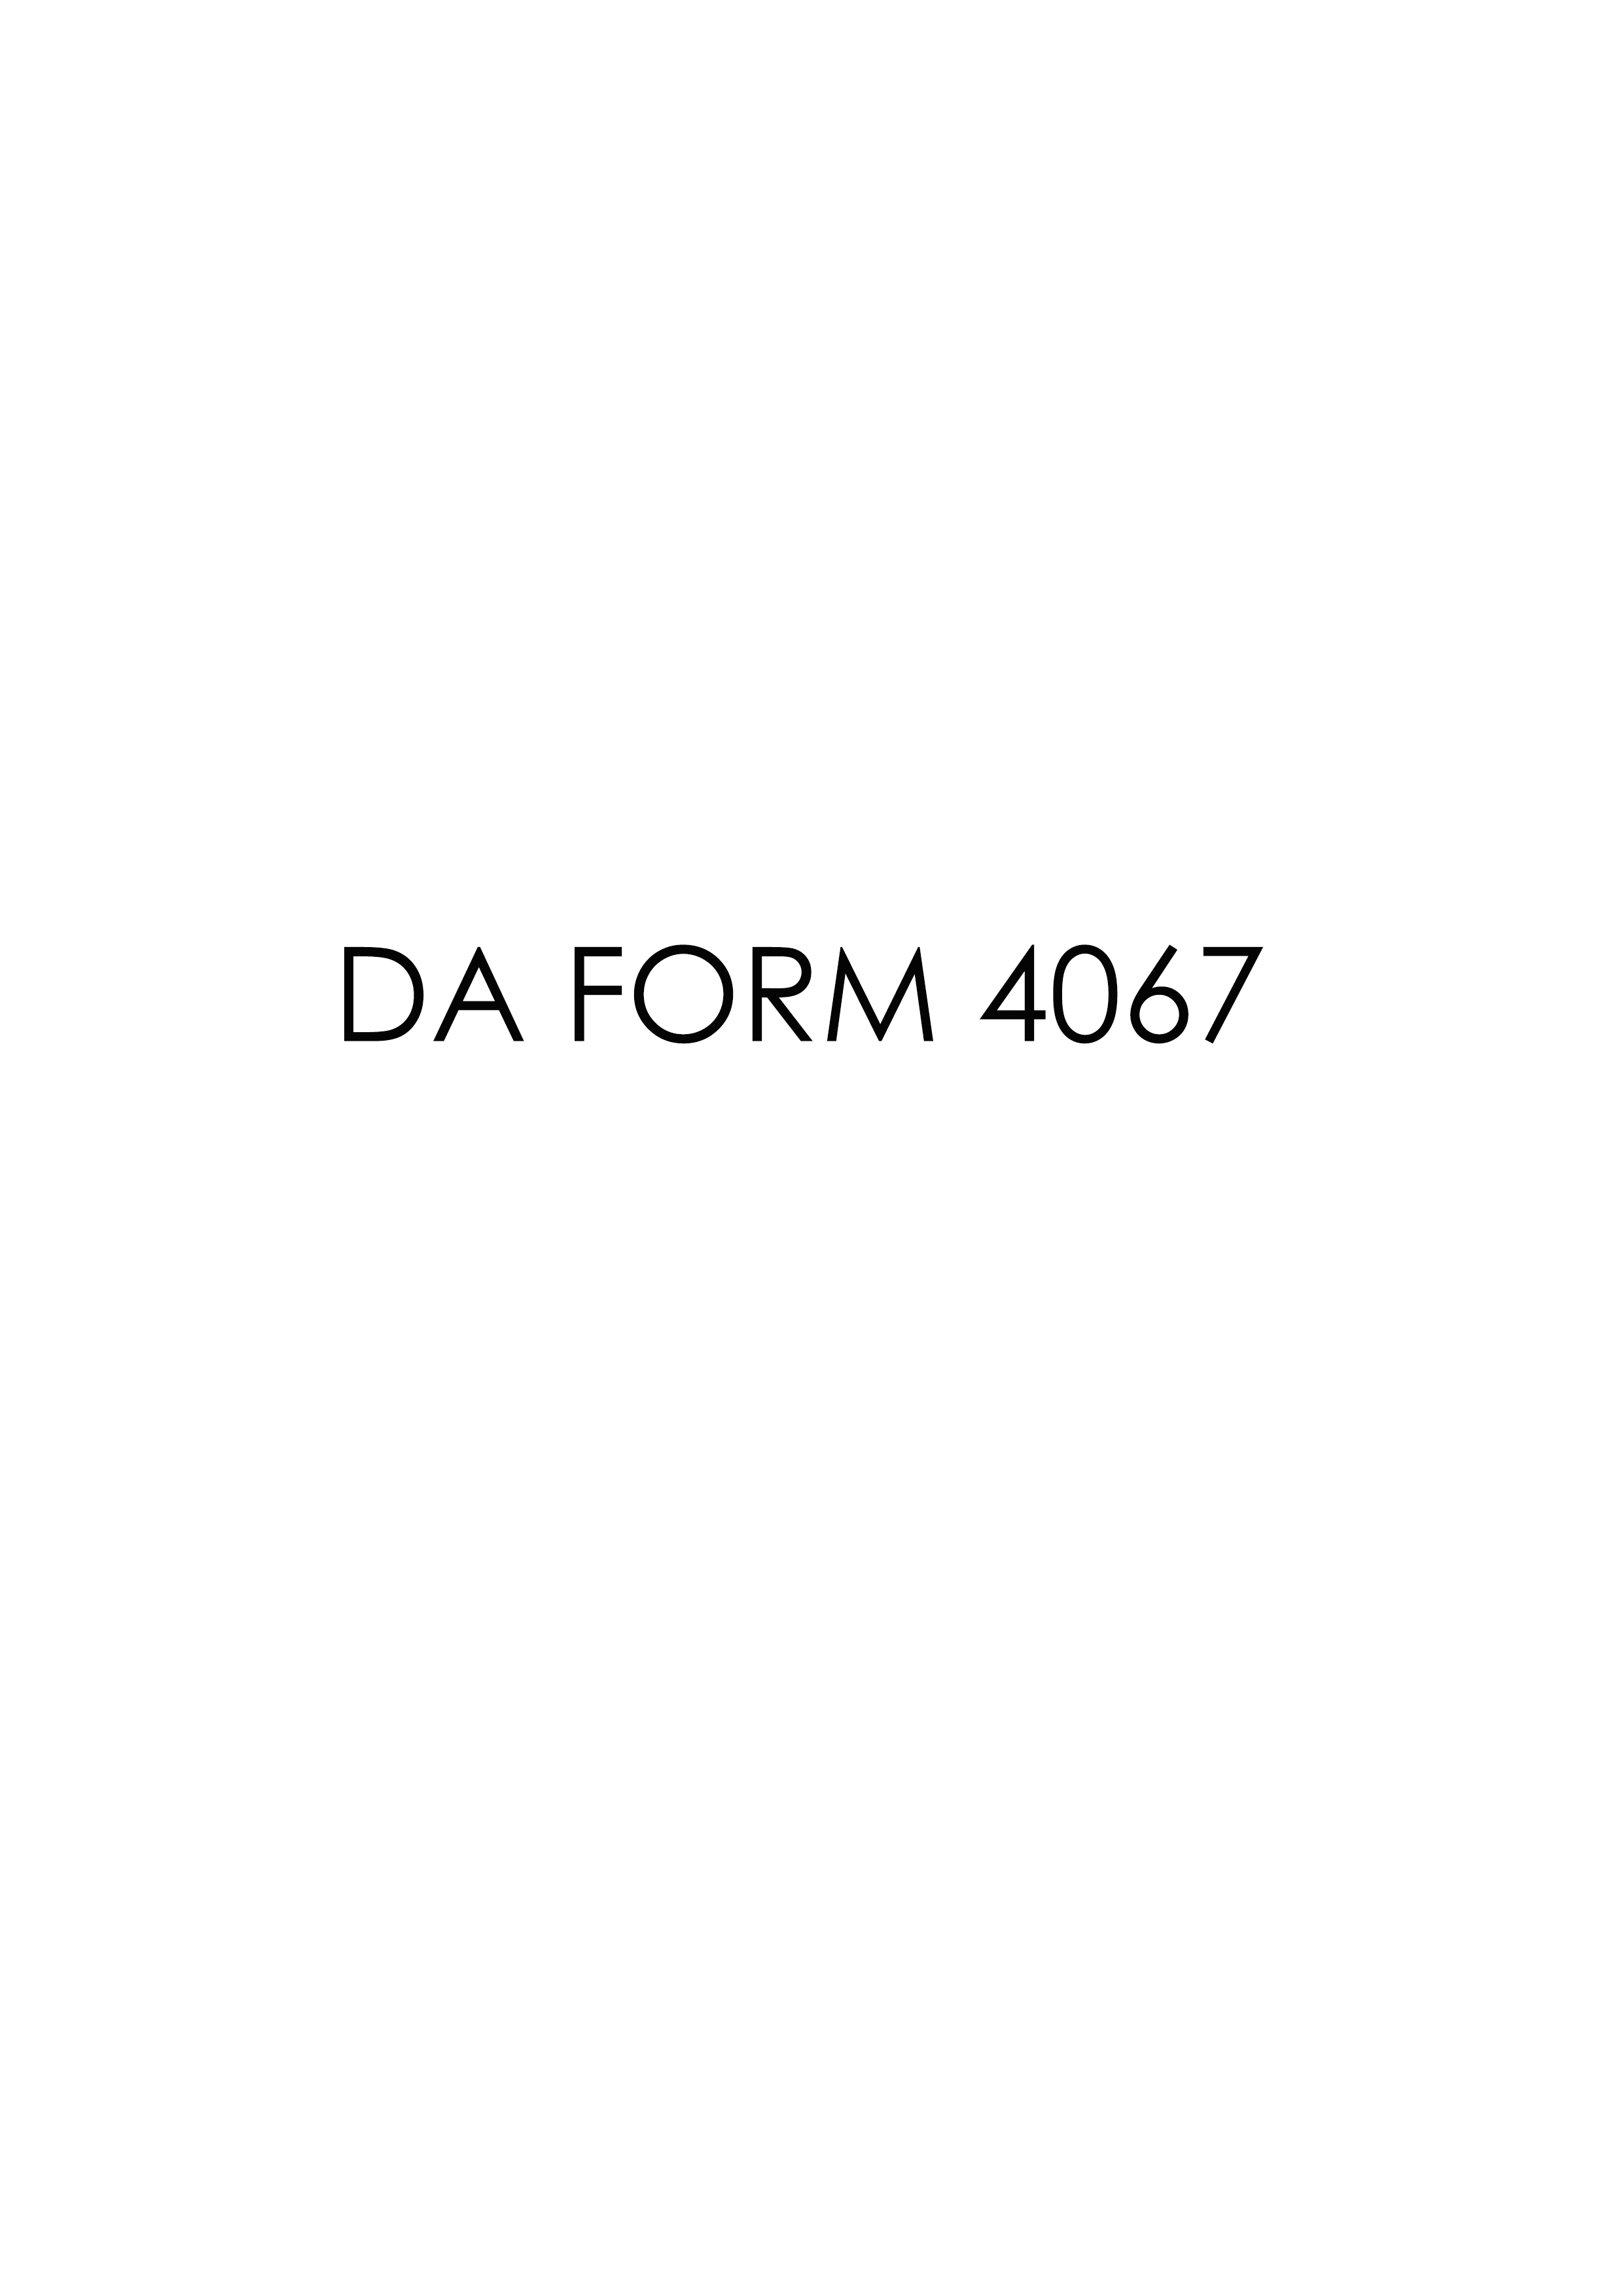 da Form 4067 fillable